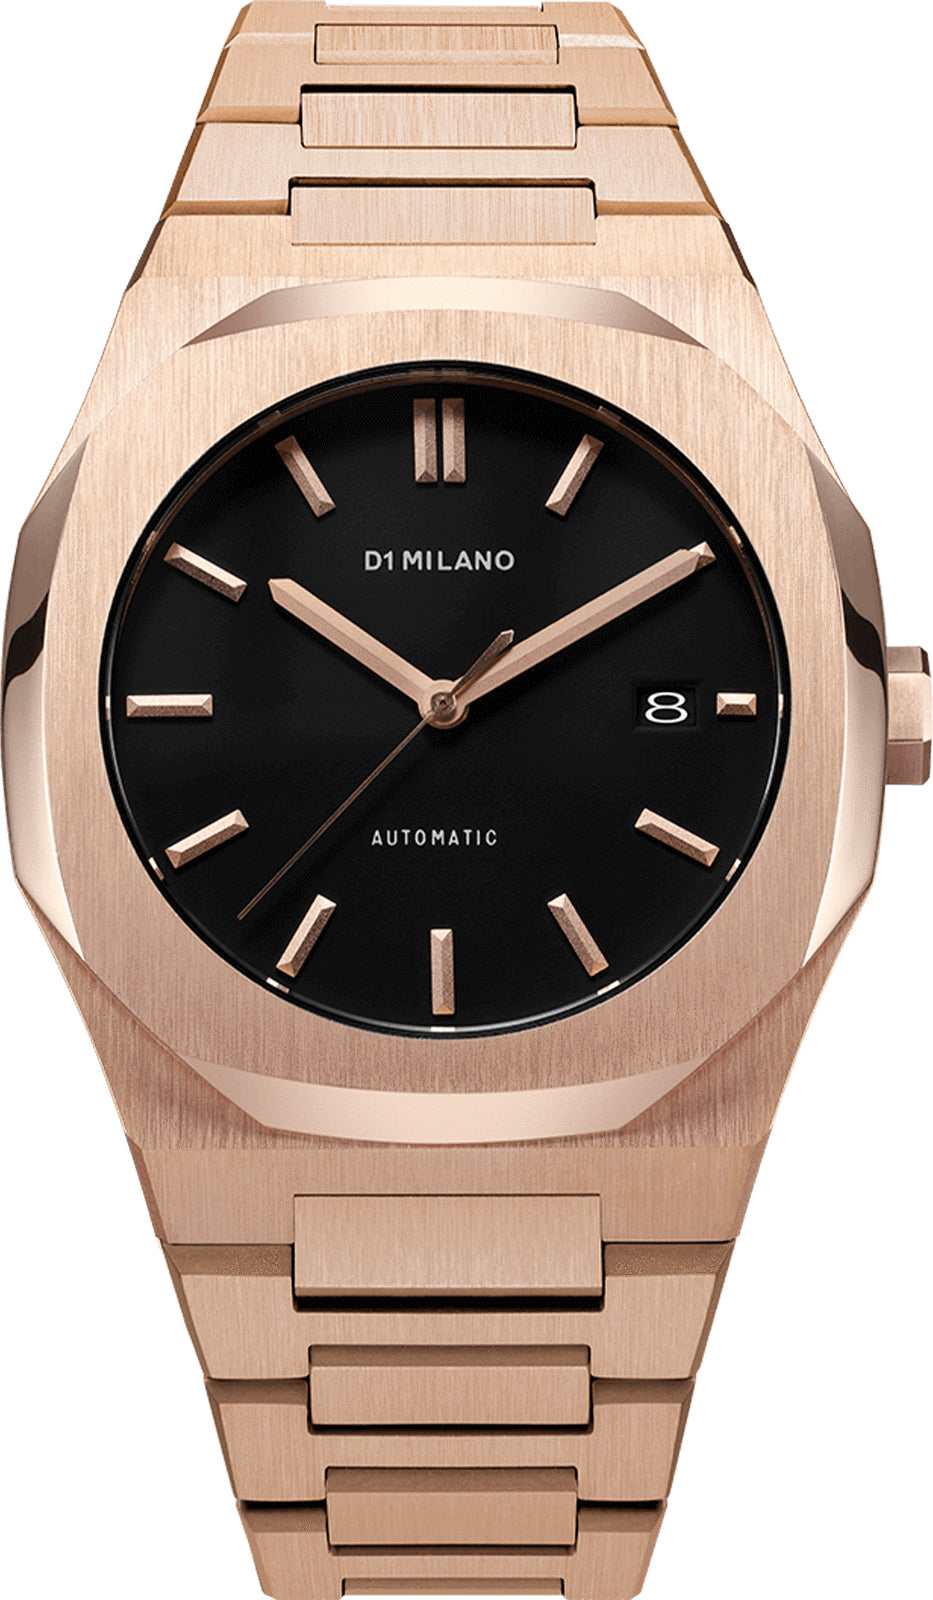 D1 Milano Watch Mechanical Automatic D1-ATBJ03 Watch | Jura Watches